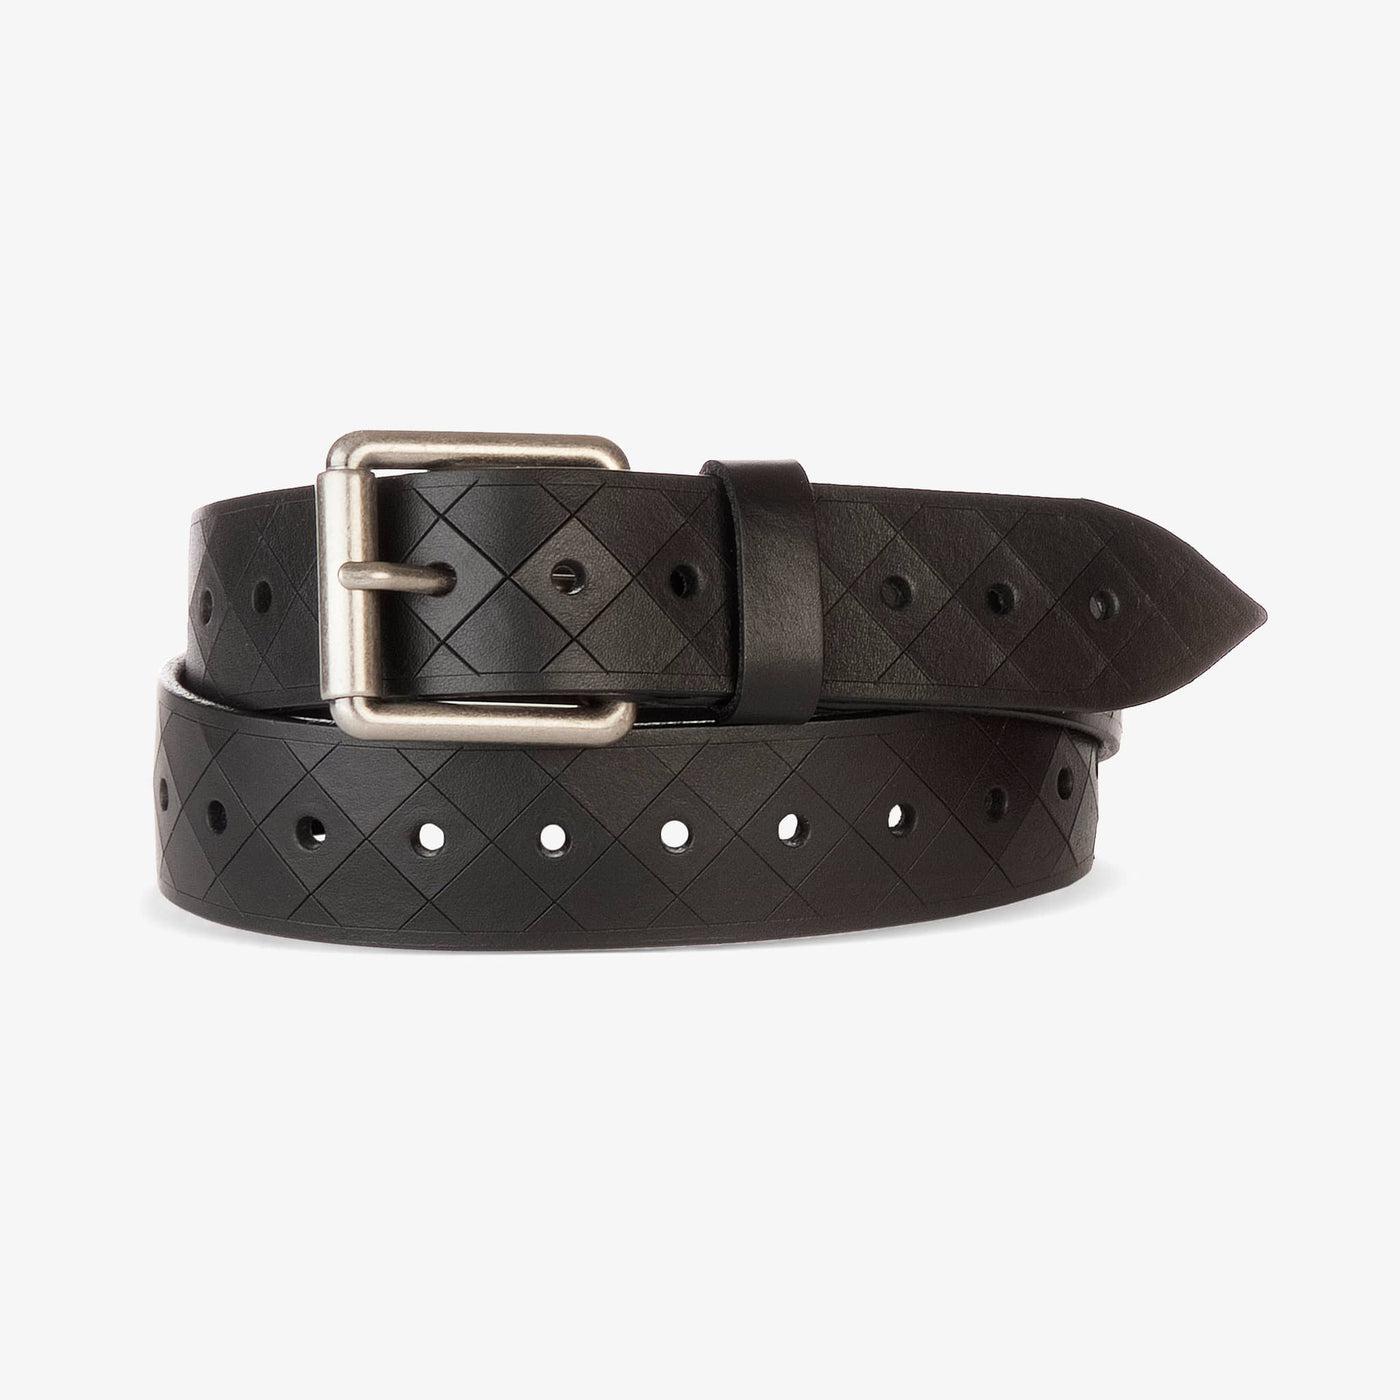 Dalitso Bridle BRAVE Leather Belt